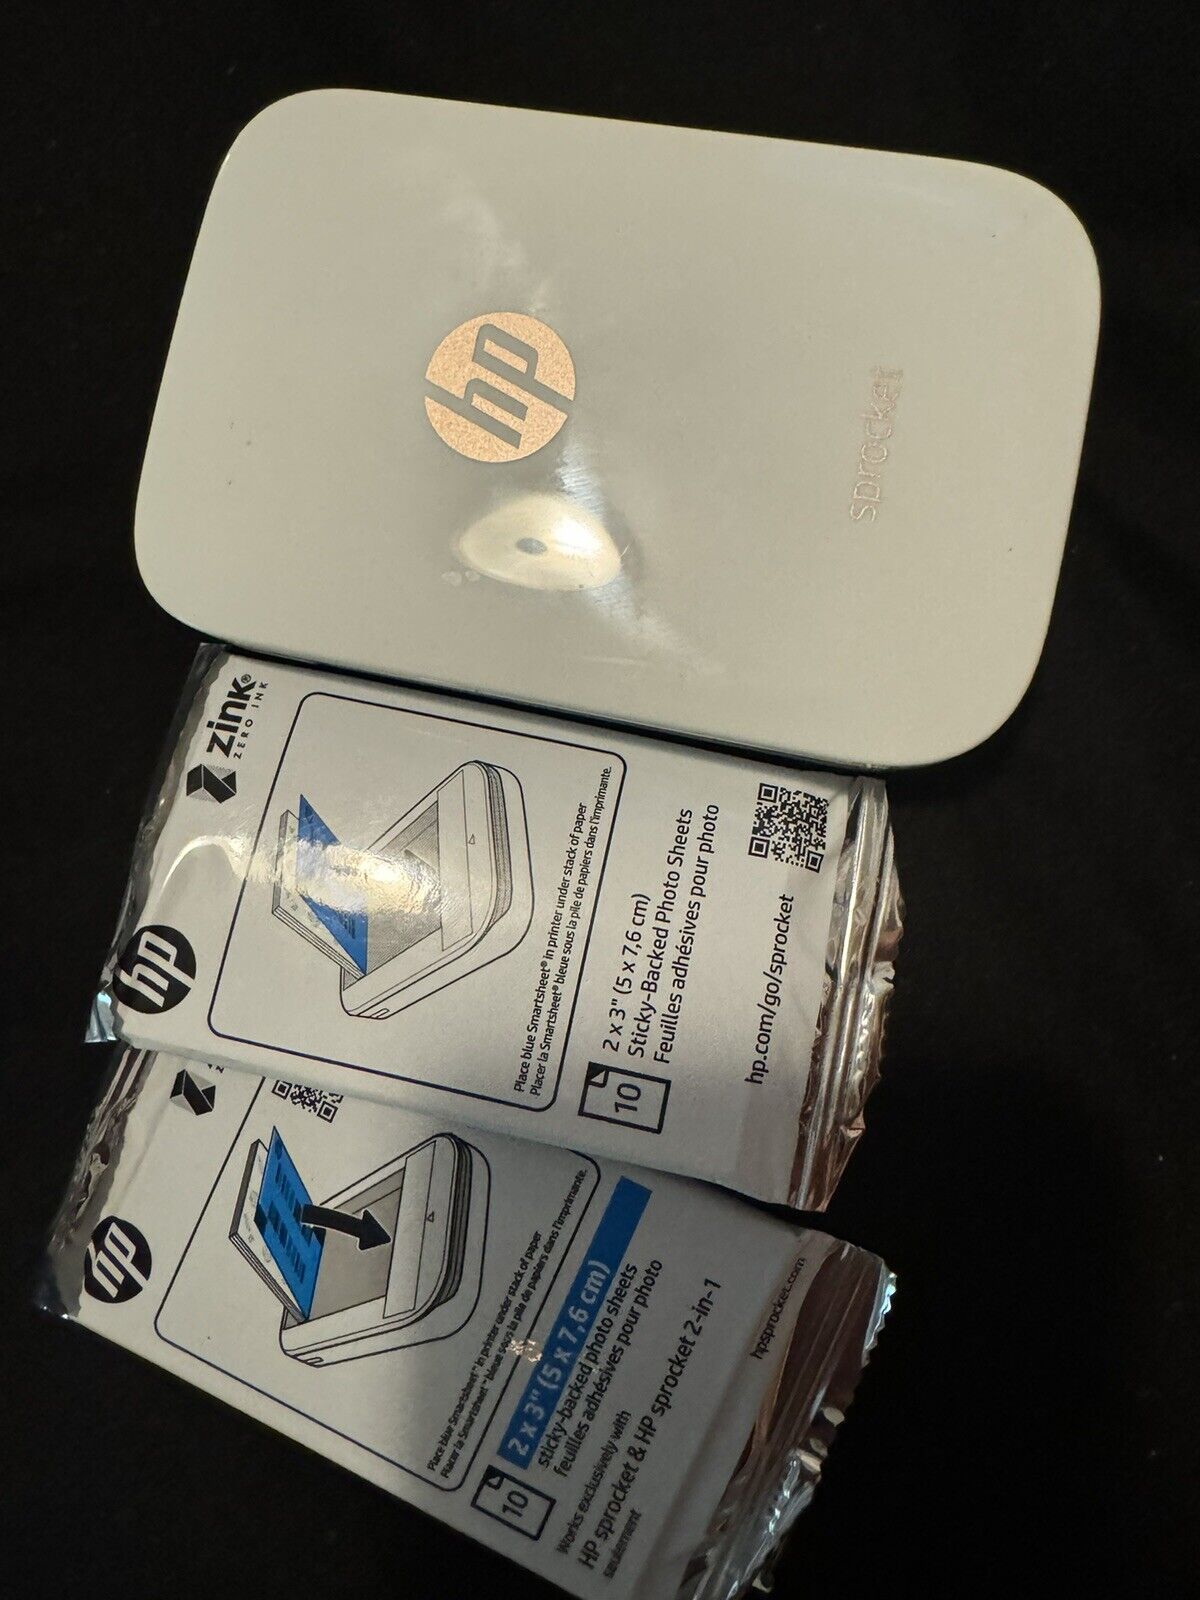 HP X7N07A Sprocket 100 Portable Photo Printer